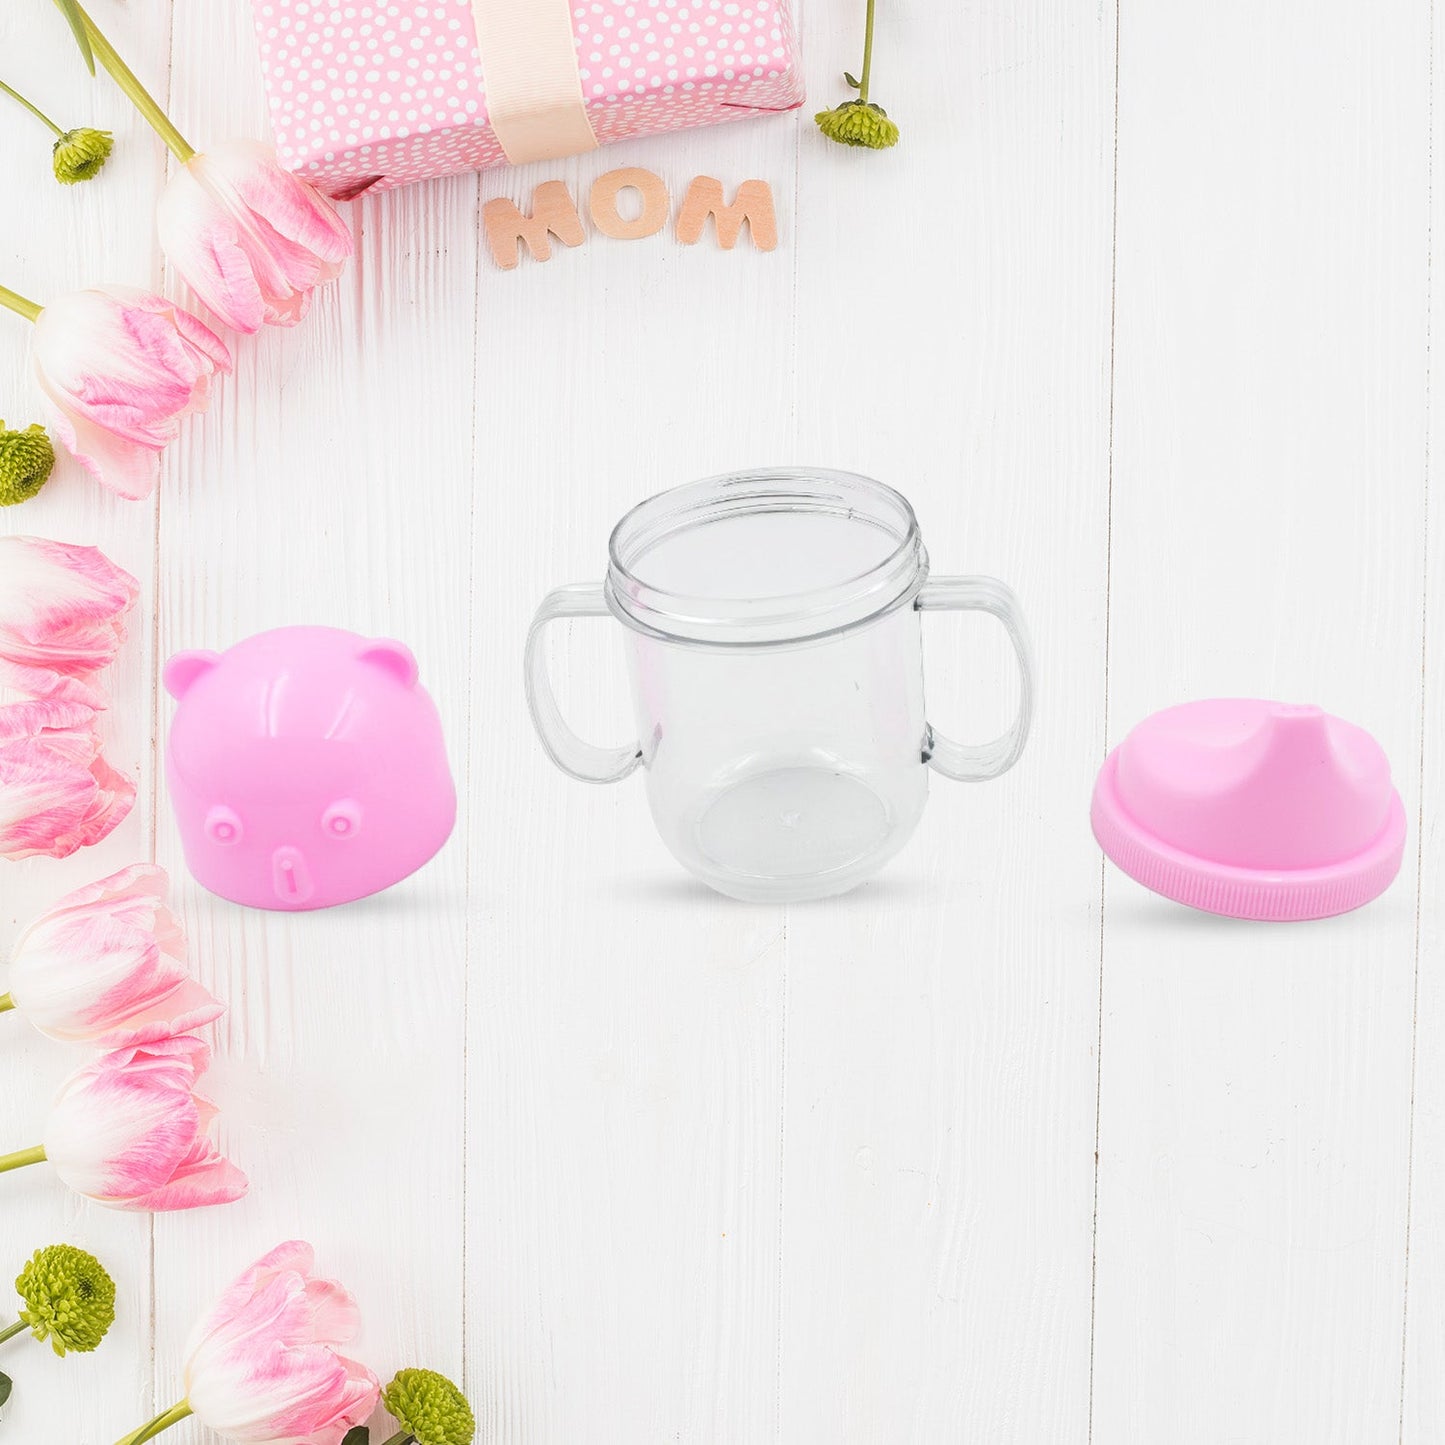 Baby Milk Mug Sippy Cup Baby Mug, Leakproof, Mug For Kids Lightweight, Nursing, Dishwasher Safe Mug (250 Ml / 1 Pc)